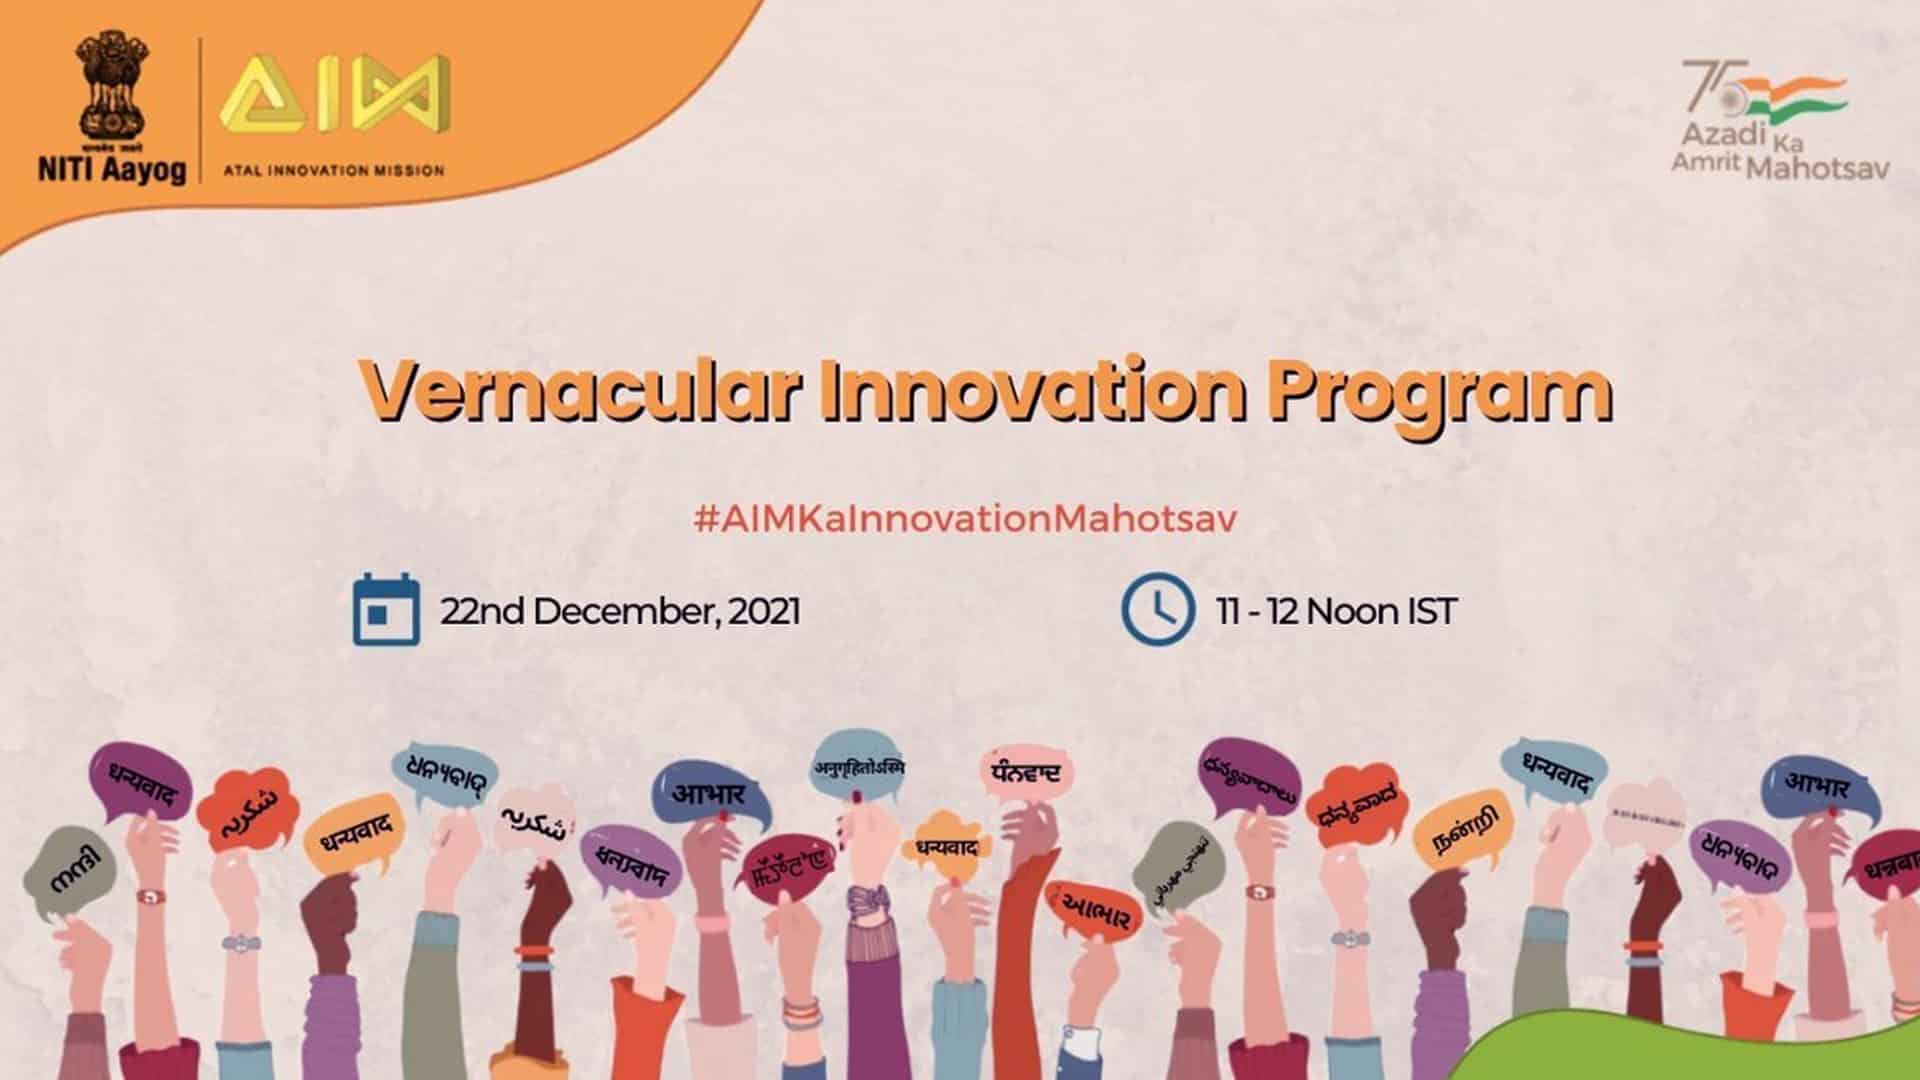 Niti Aayog's Atal Innovation Mission unveils Vernacular Innovation Program